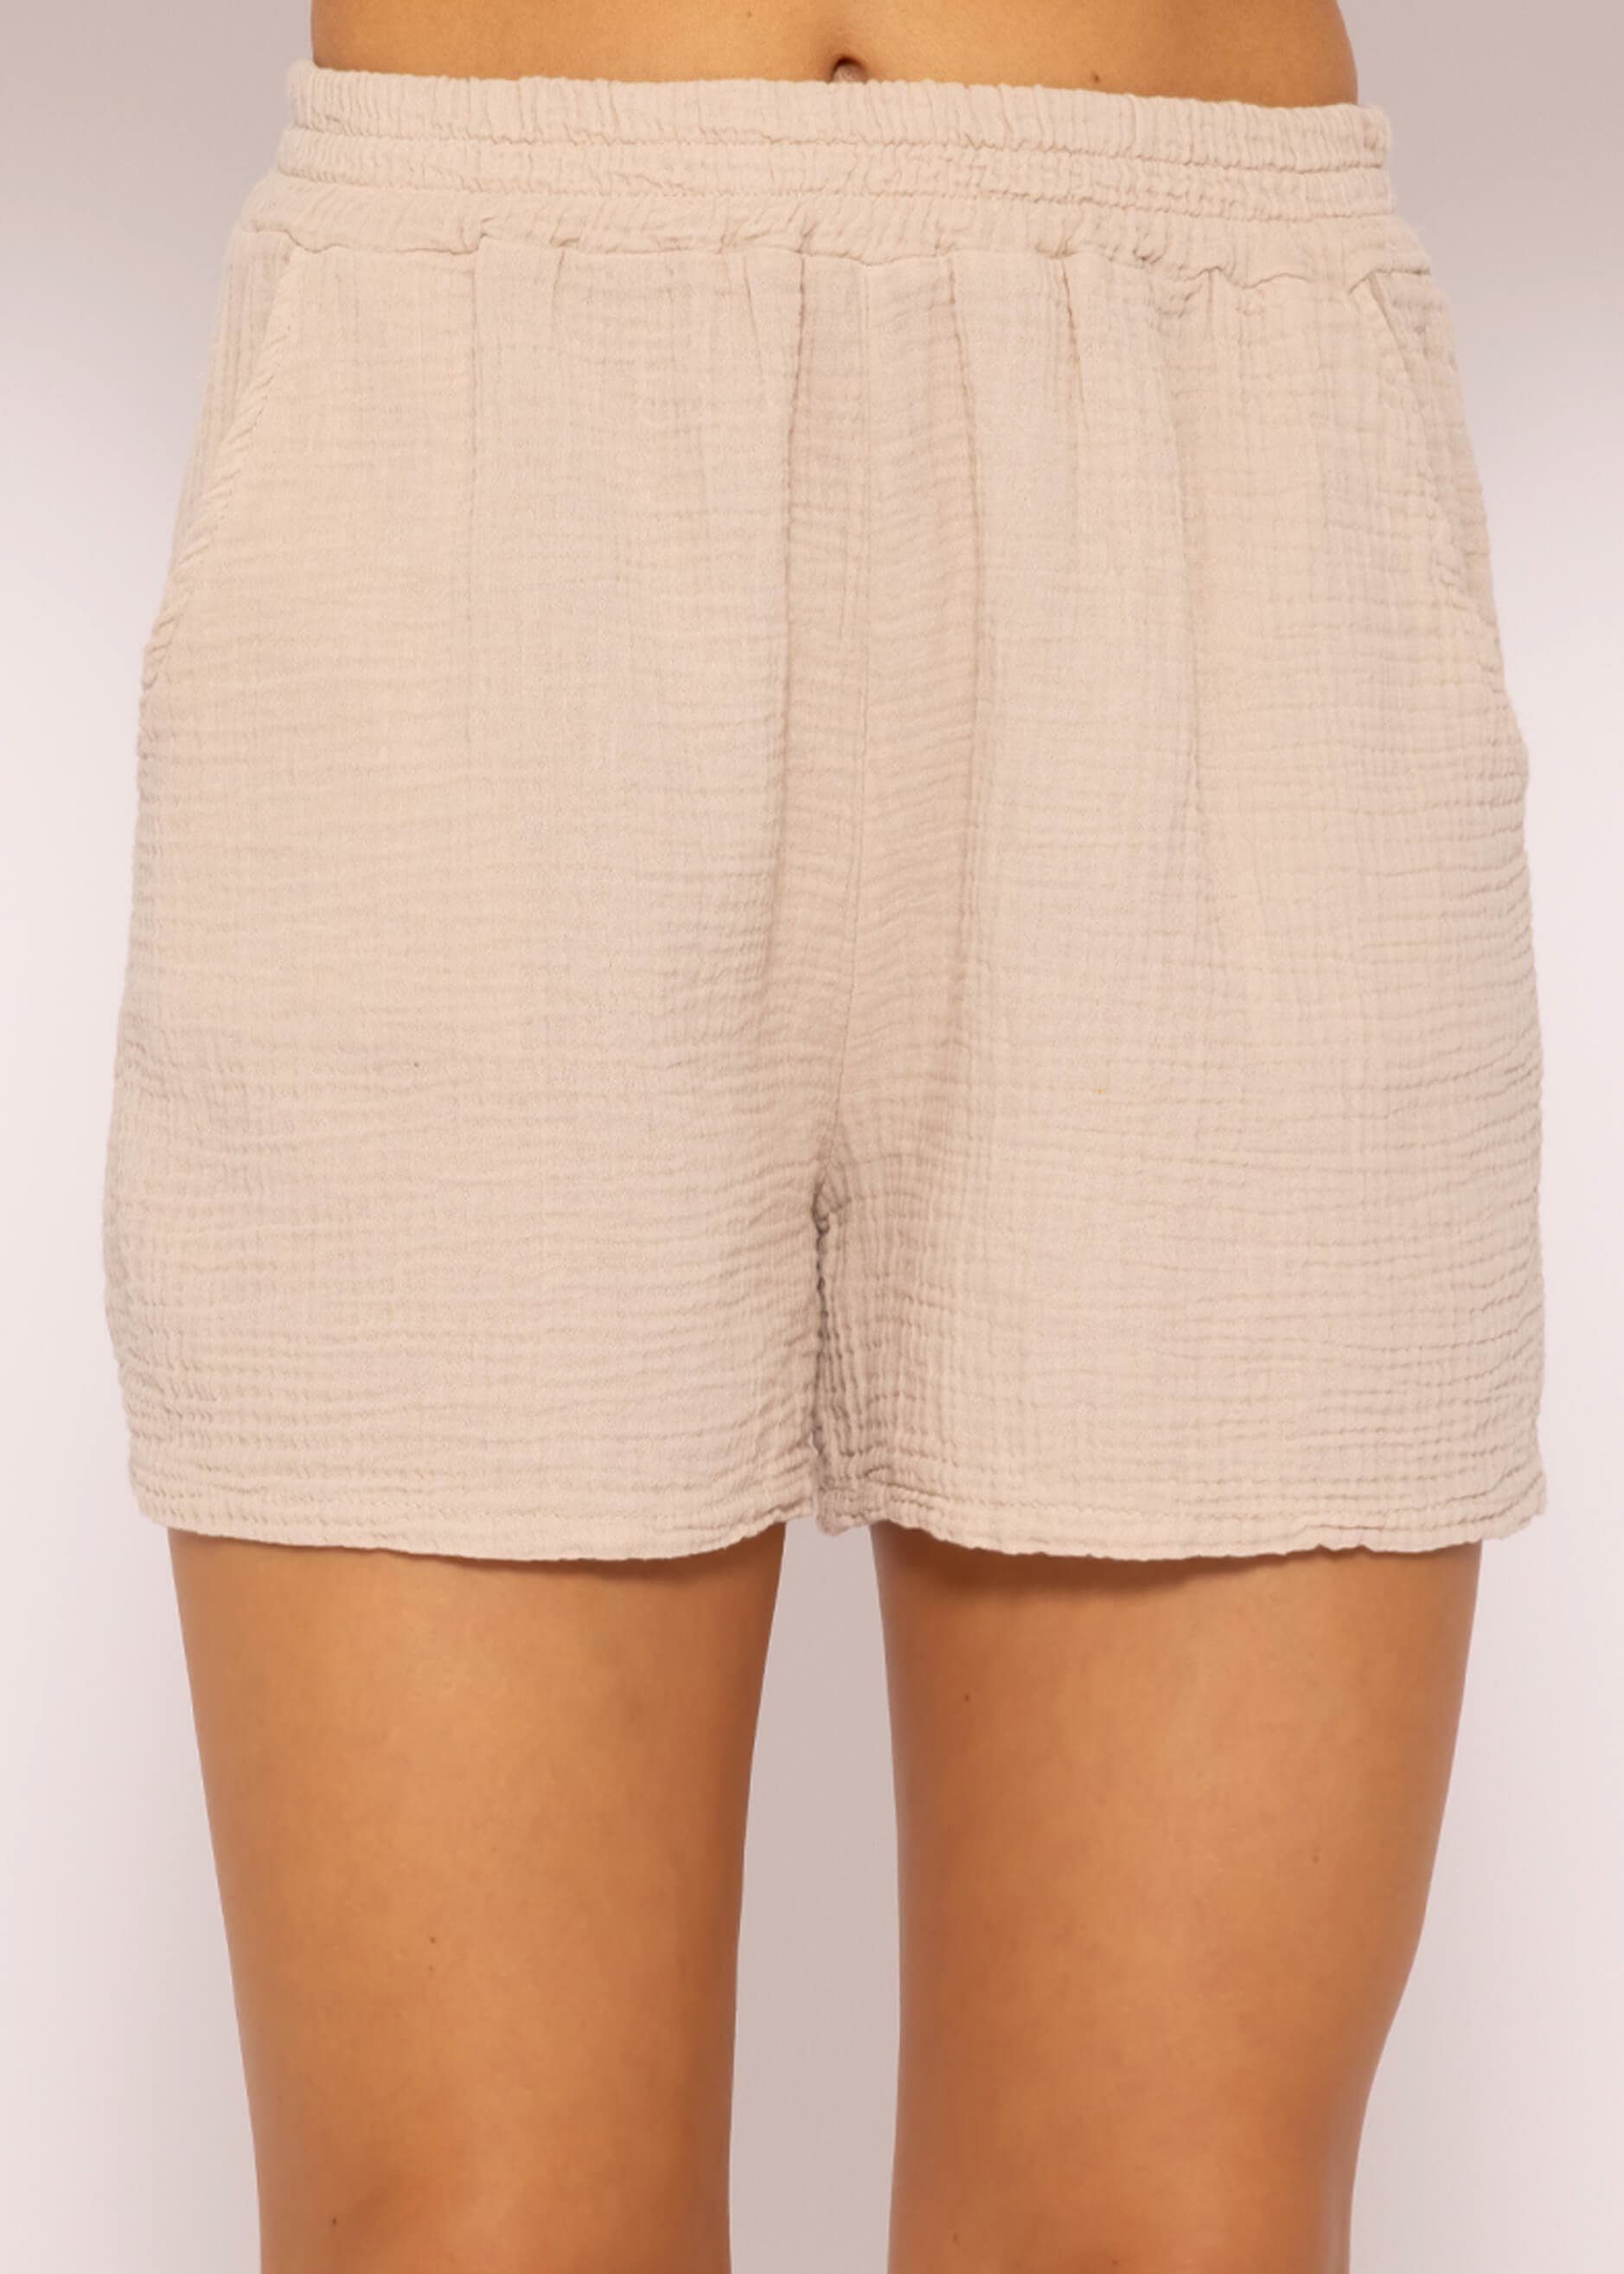 SASSYCLASSY Shorts Musselin Sommer Hose Damen Kurz 100 % Baumwolle (Musselin), atmungsaktiv, sehr leicht, Made in Italy Beige